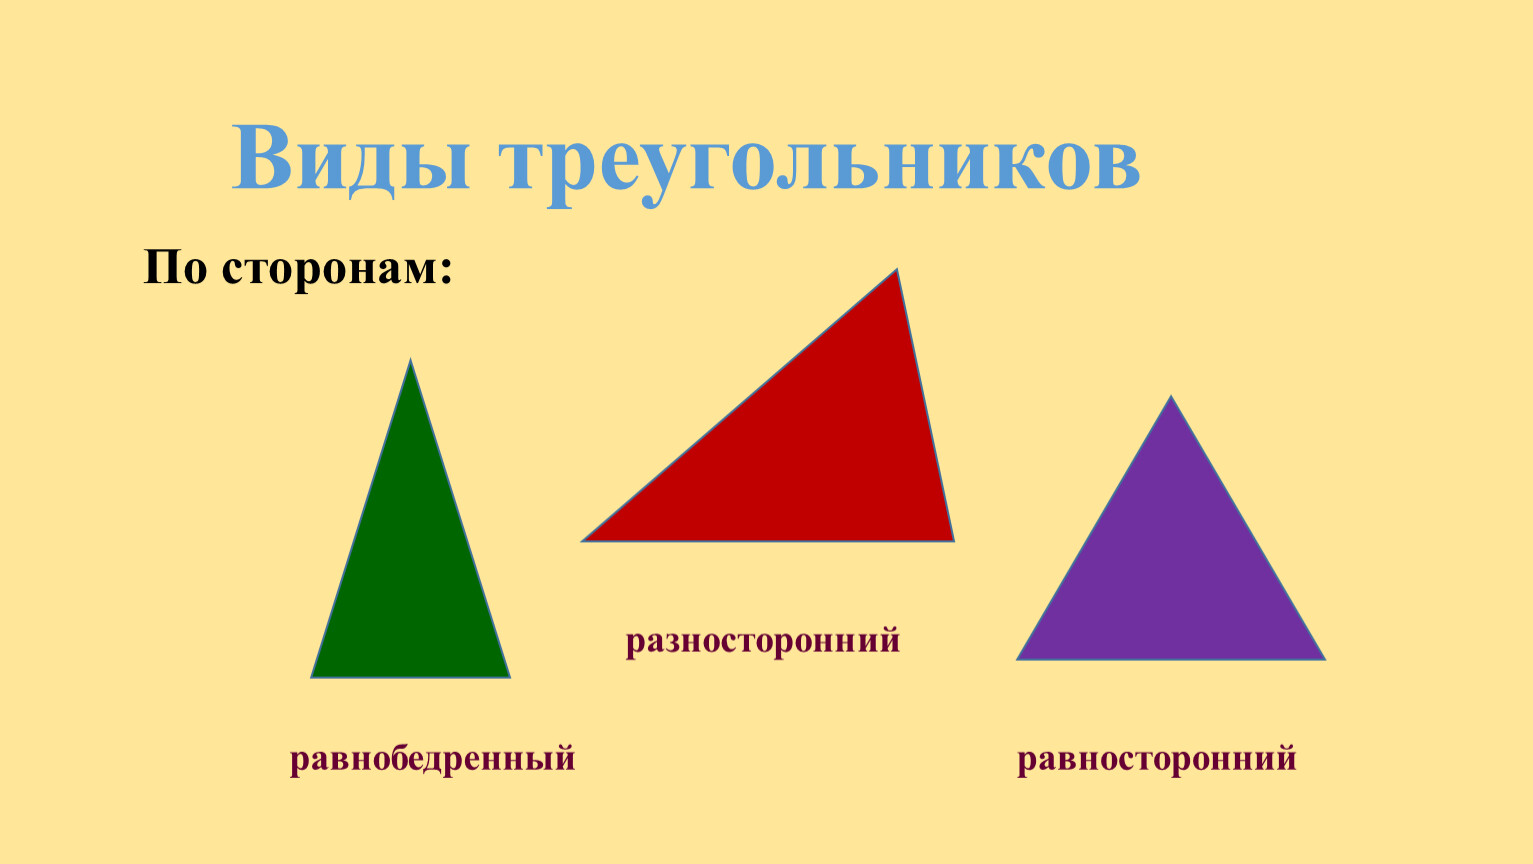 Слово равносторонний. Равнобедренный равносторонний и разносторонний треугольники. Разные треугольники. Треугольник с разными сторонами. Разные виды треугольников.